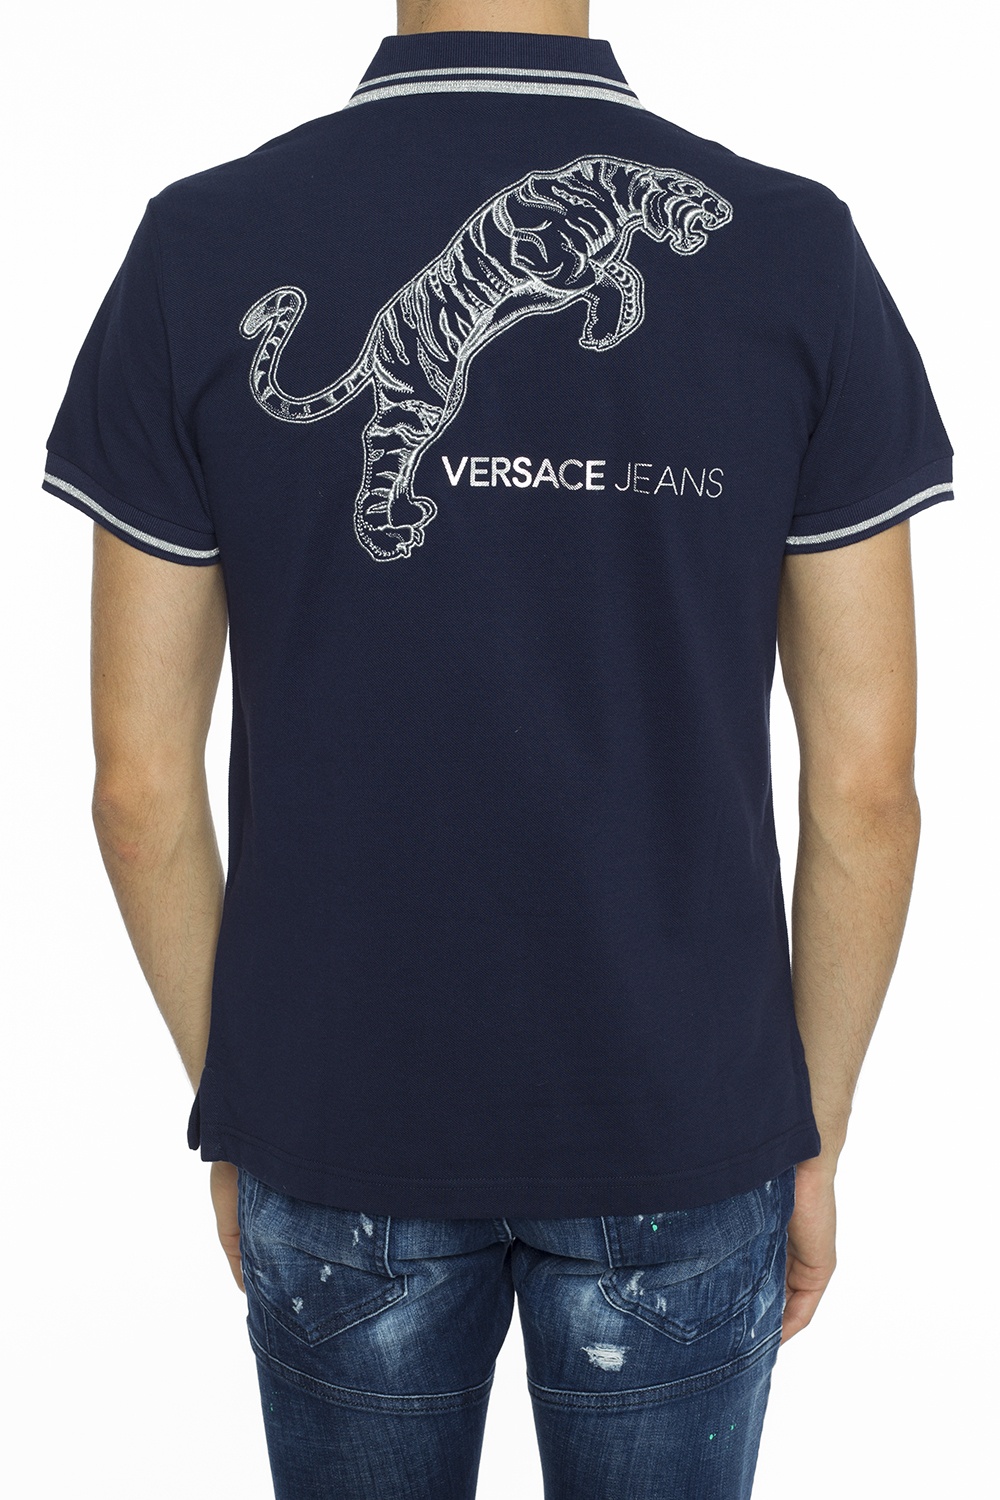 versace shirt with tiger